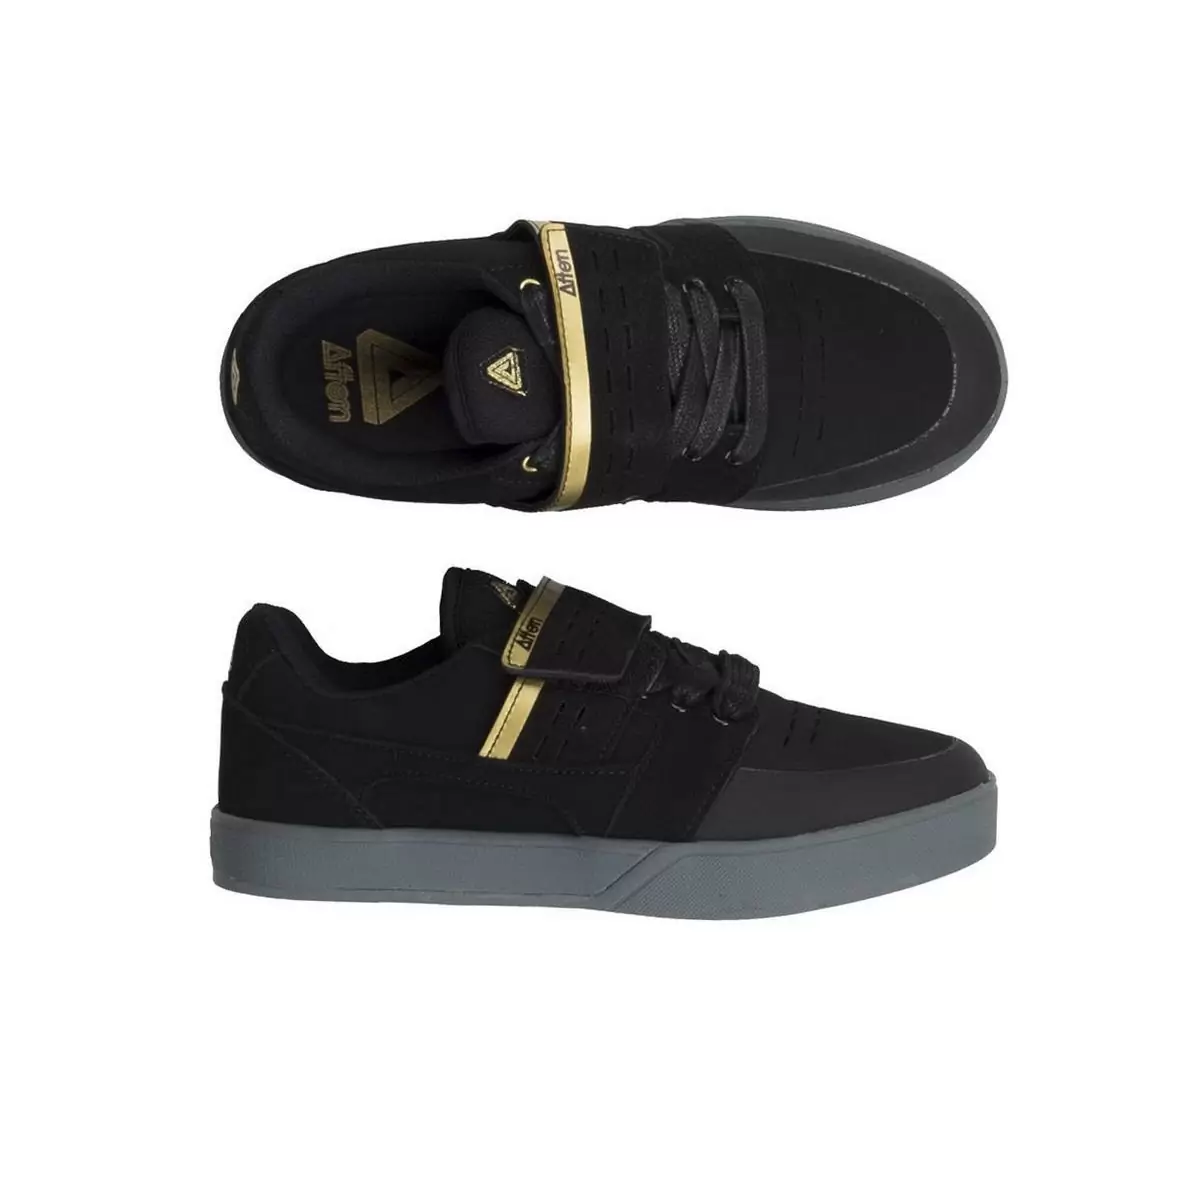 MTB Shoes Vectal SPD Black/Gold Size 42.5 - image